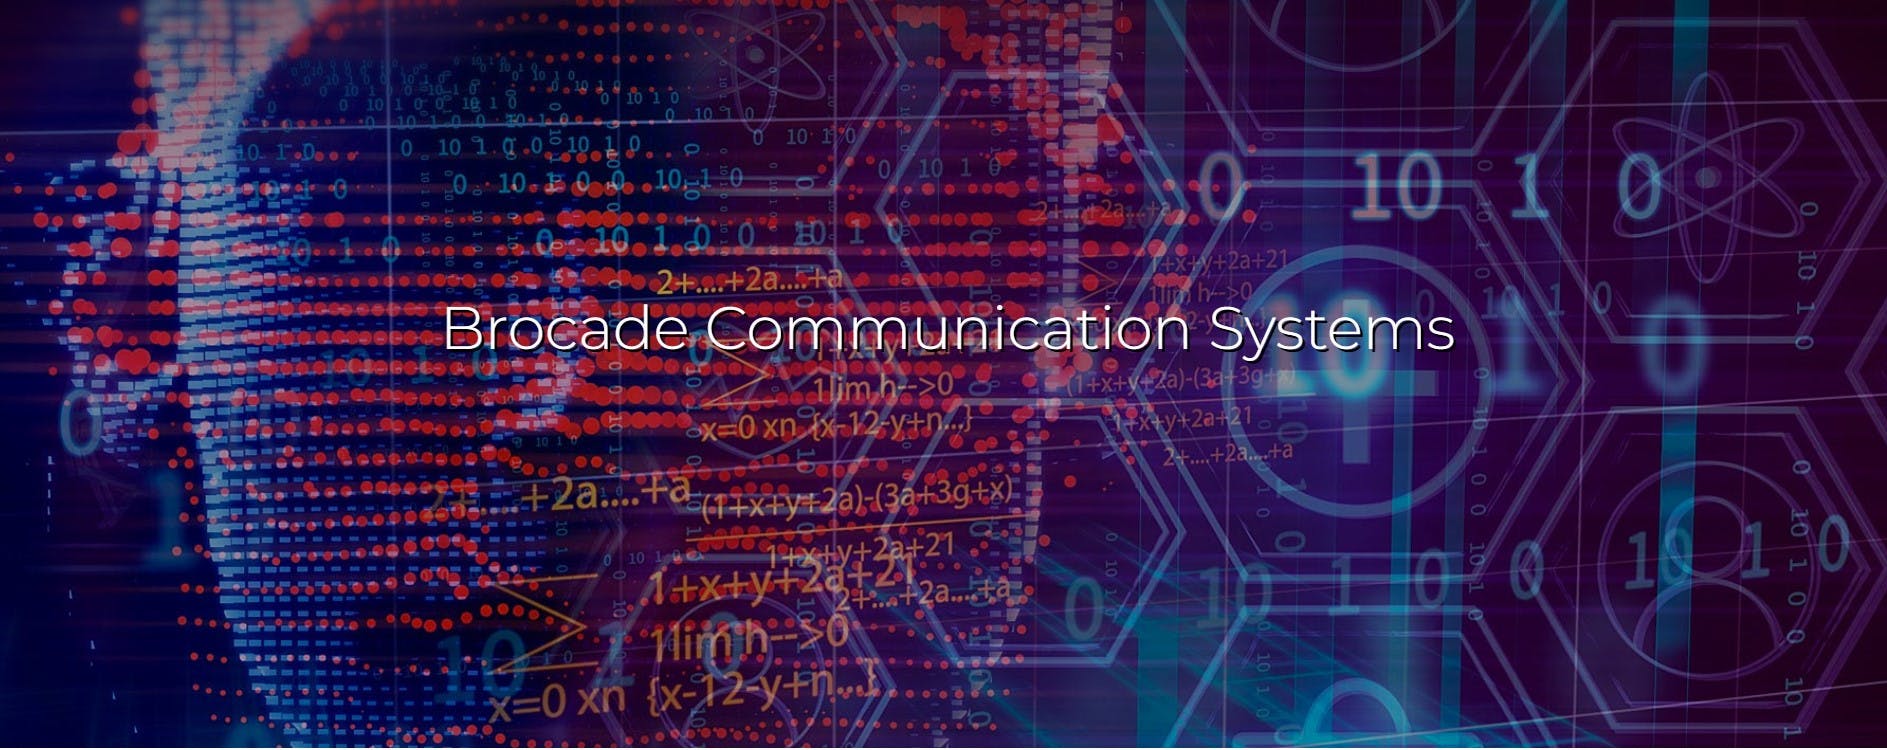 Brocade Communication Systems